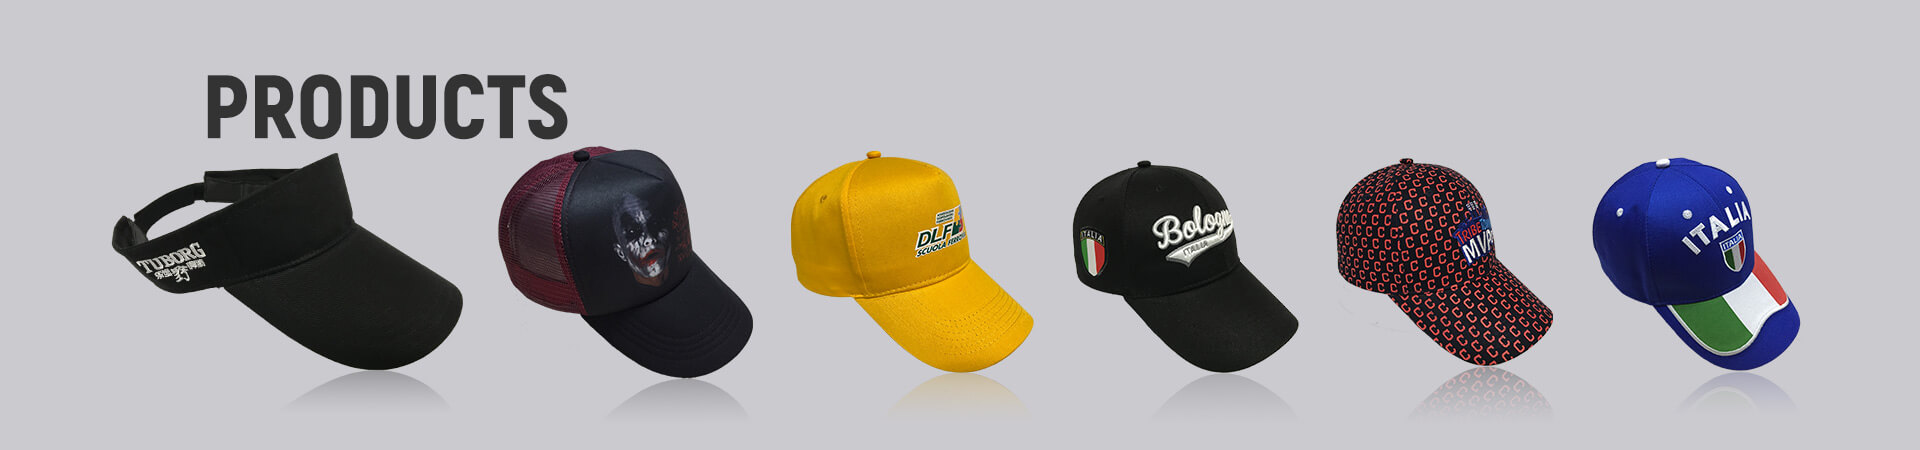 Trucker Hat Archives - Baseball Cap,Sports Cap,Golf Cap,Bucket Hat,Fisherman Hat,Trucker Hat